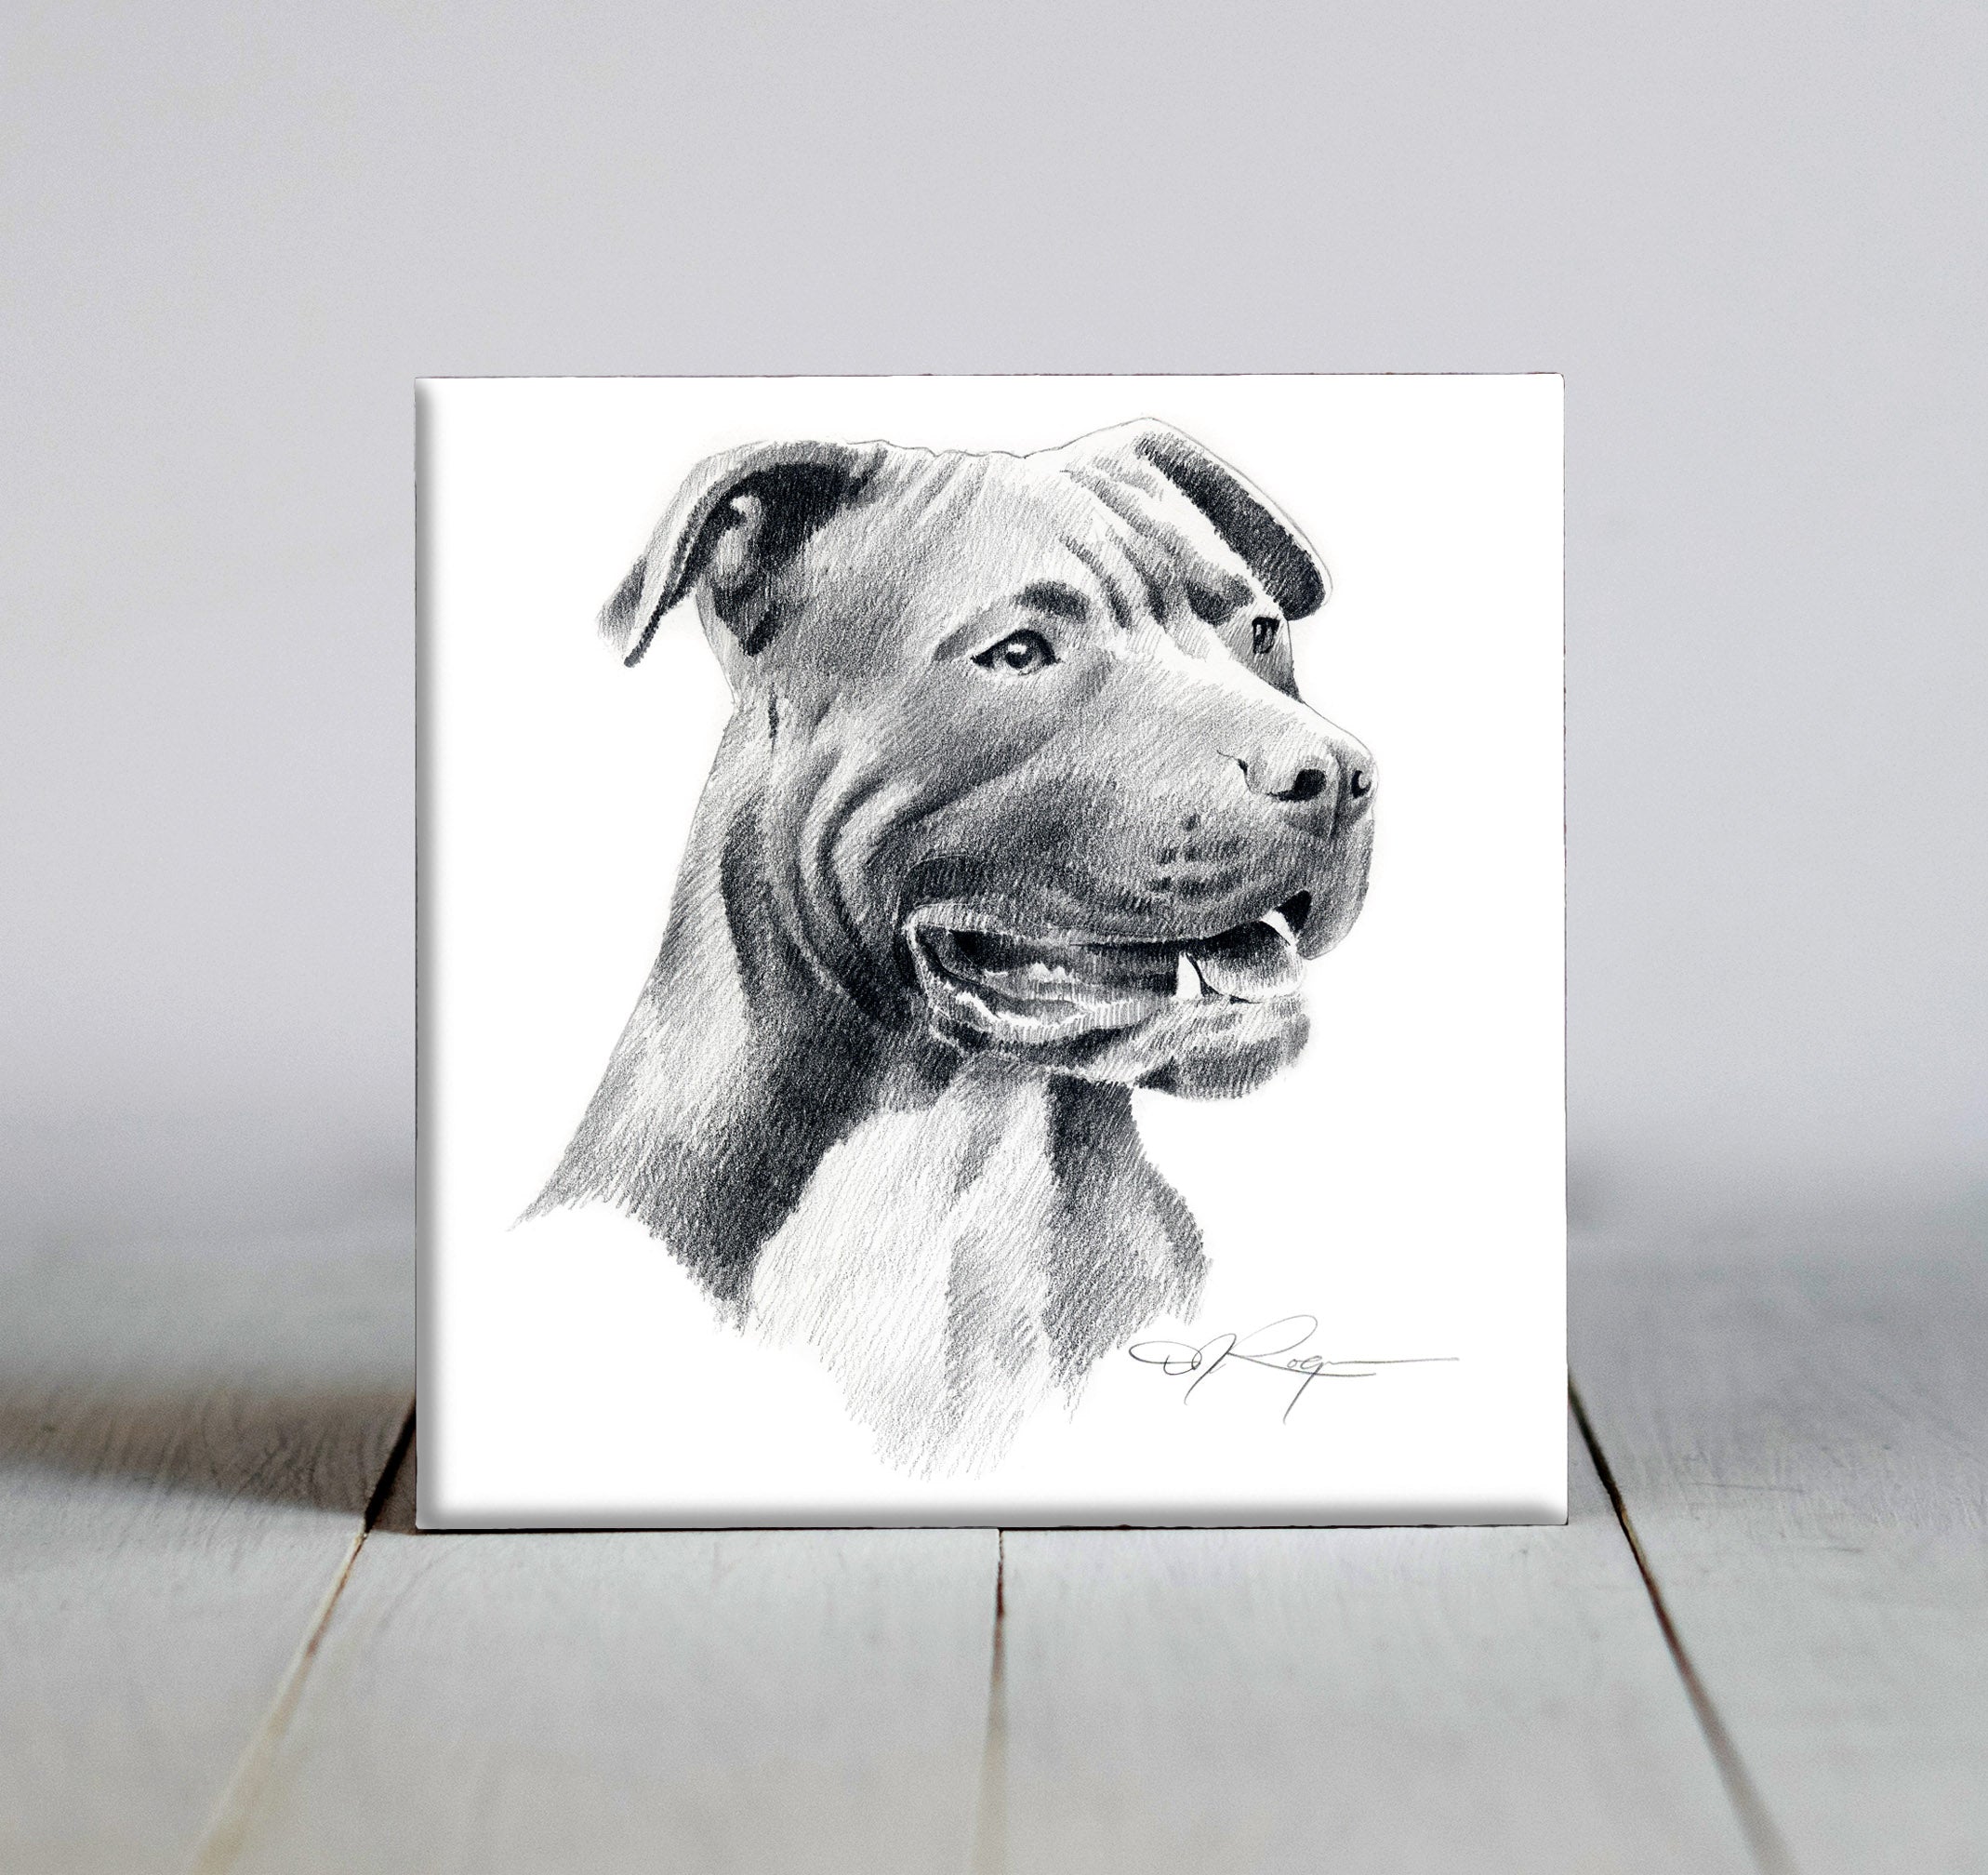 American Pit Bull Terrier Pencil Dog Art Decorative Tile by Artist DJ Rogers